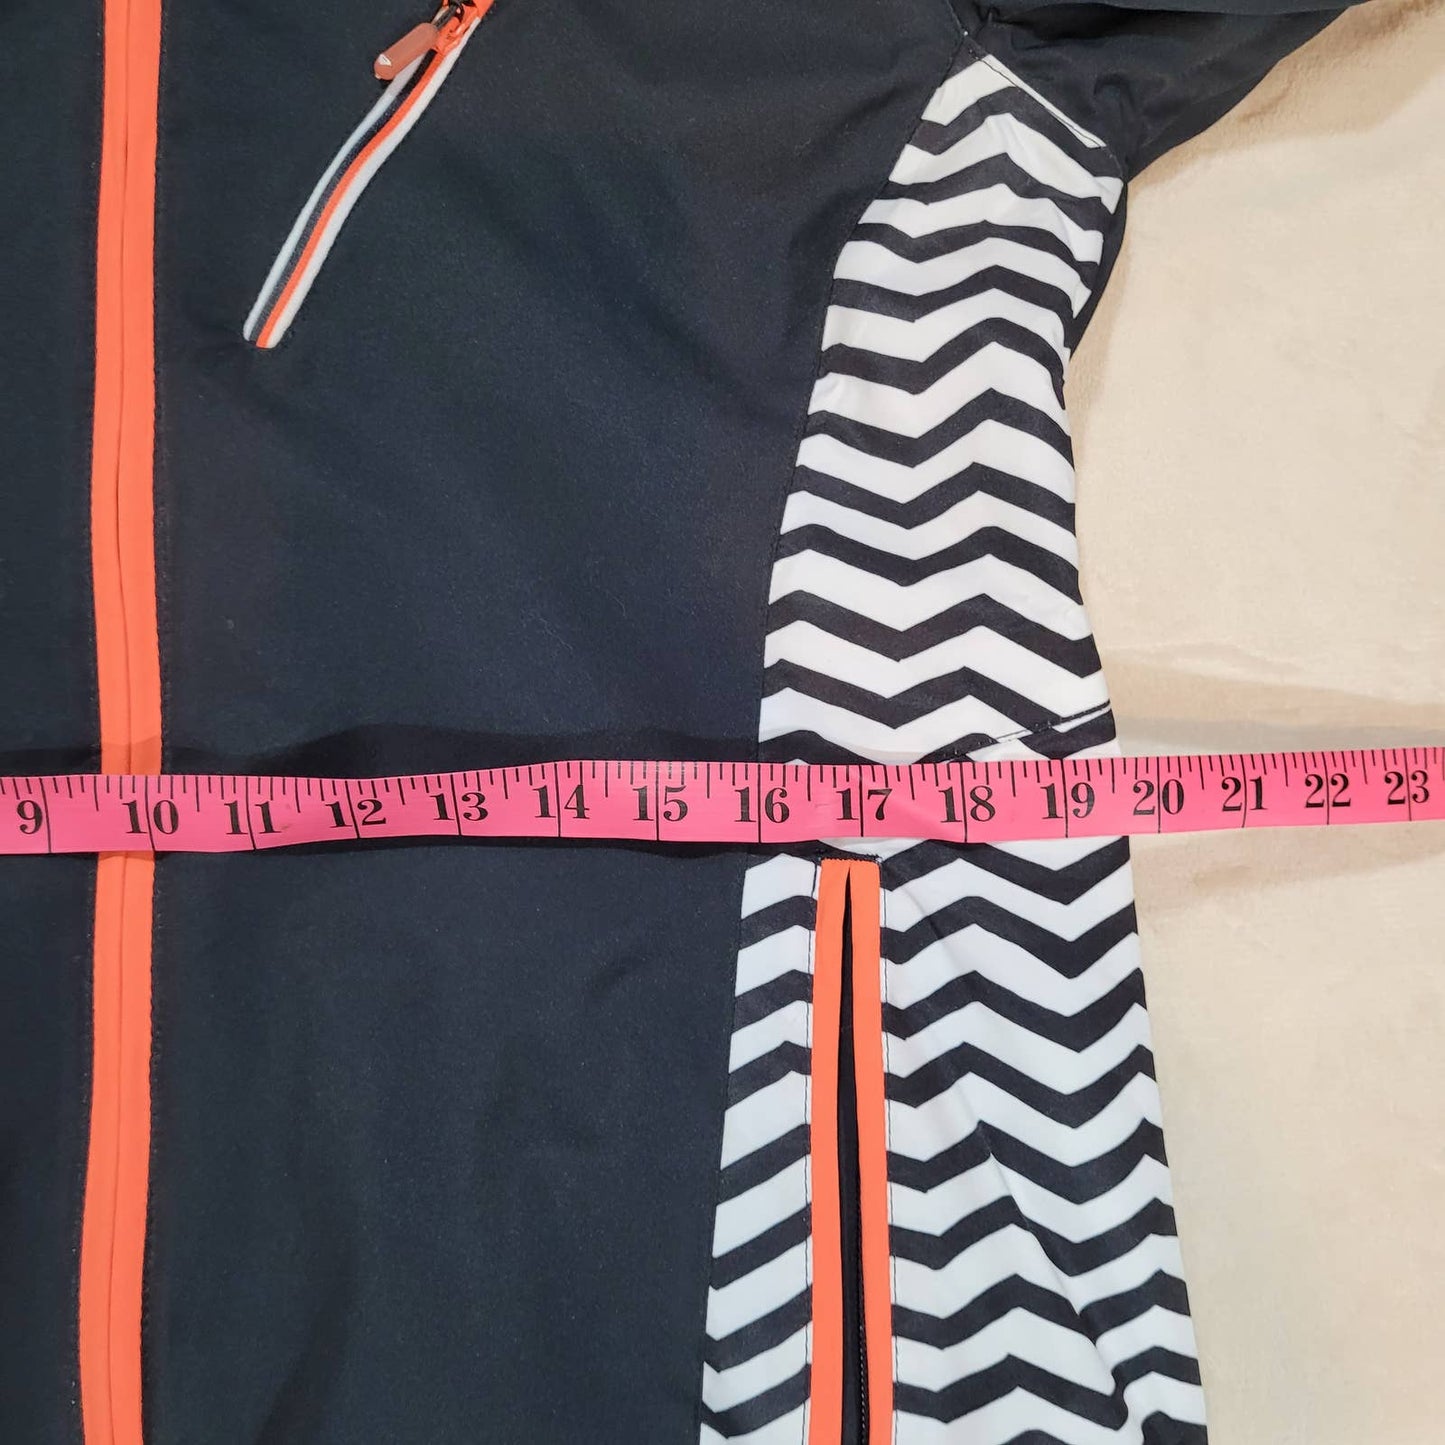 Roxy Black and Orange Jacket with White Zig Zag Stripes - Size LargeMarkita's ClosetROXY